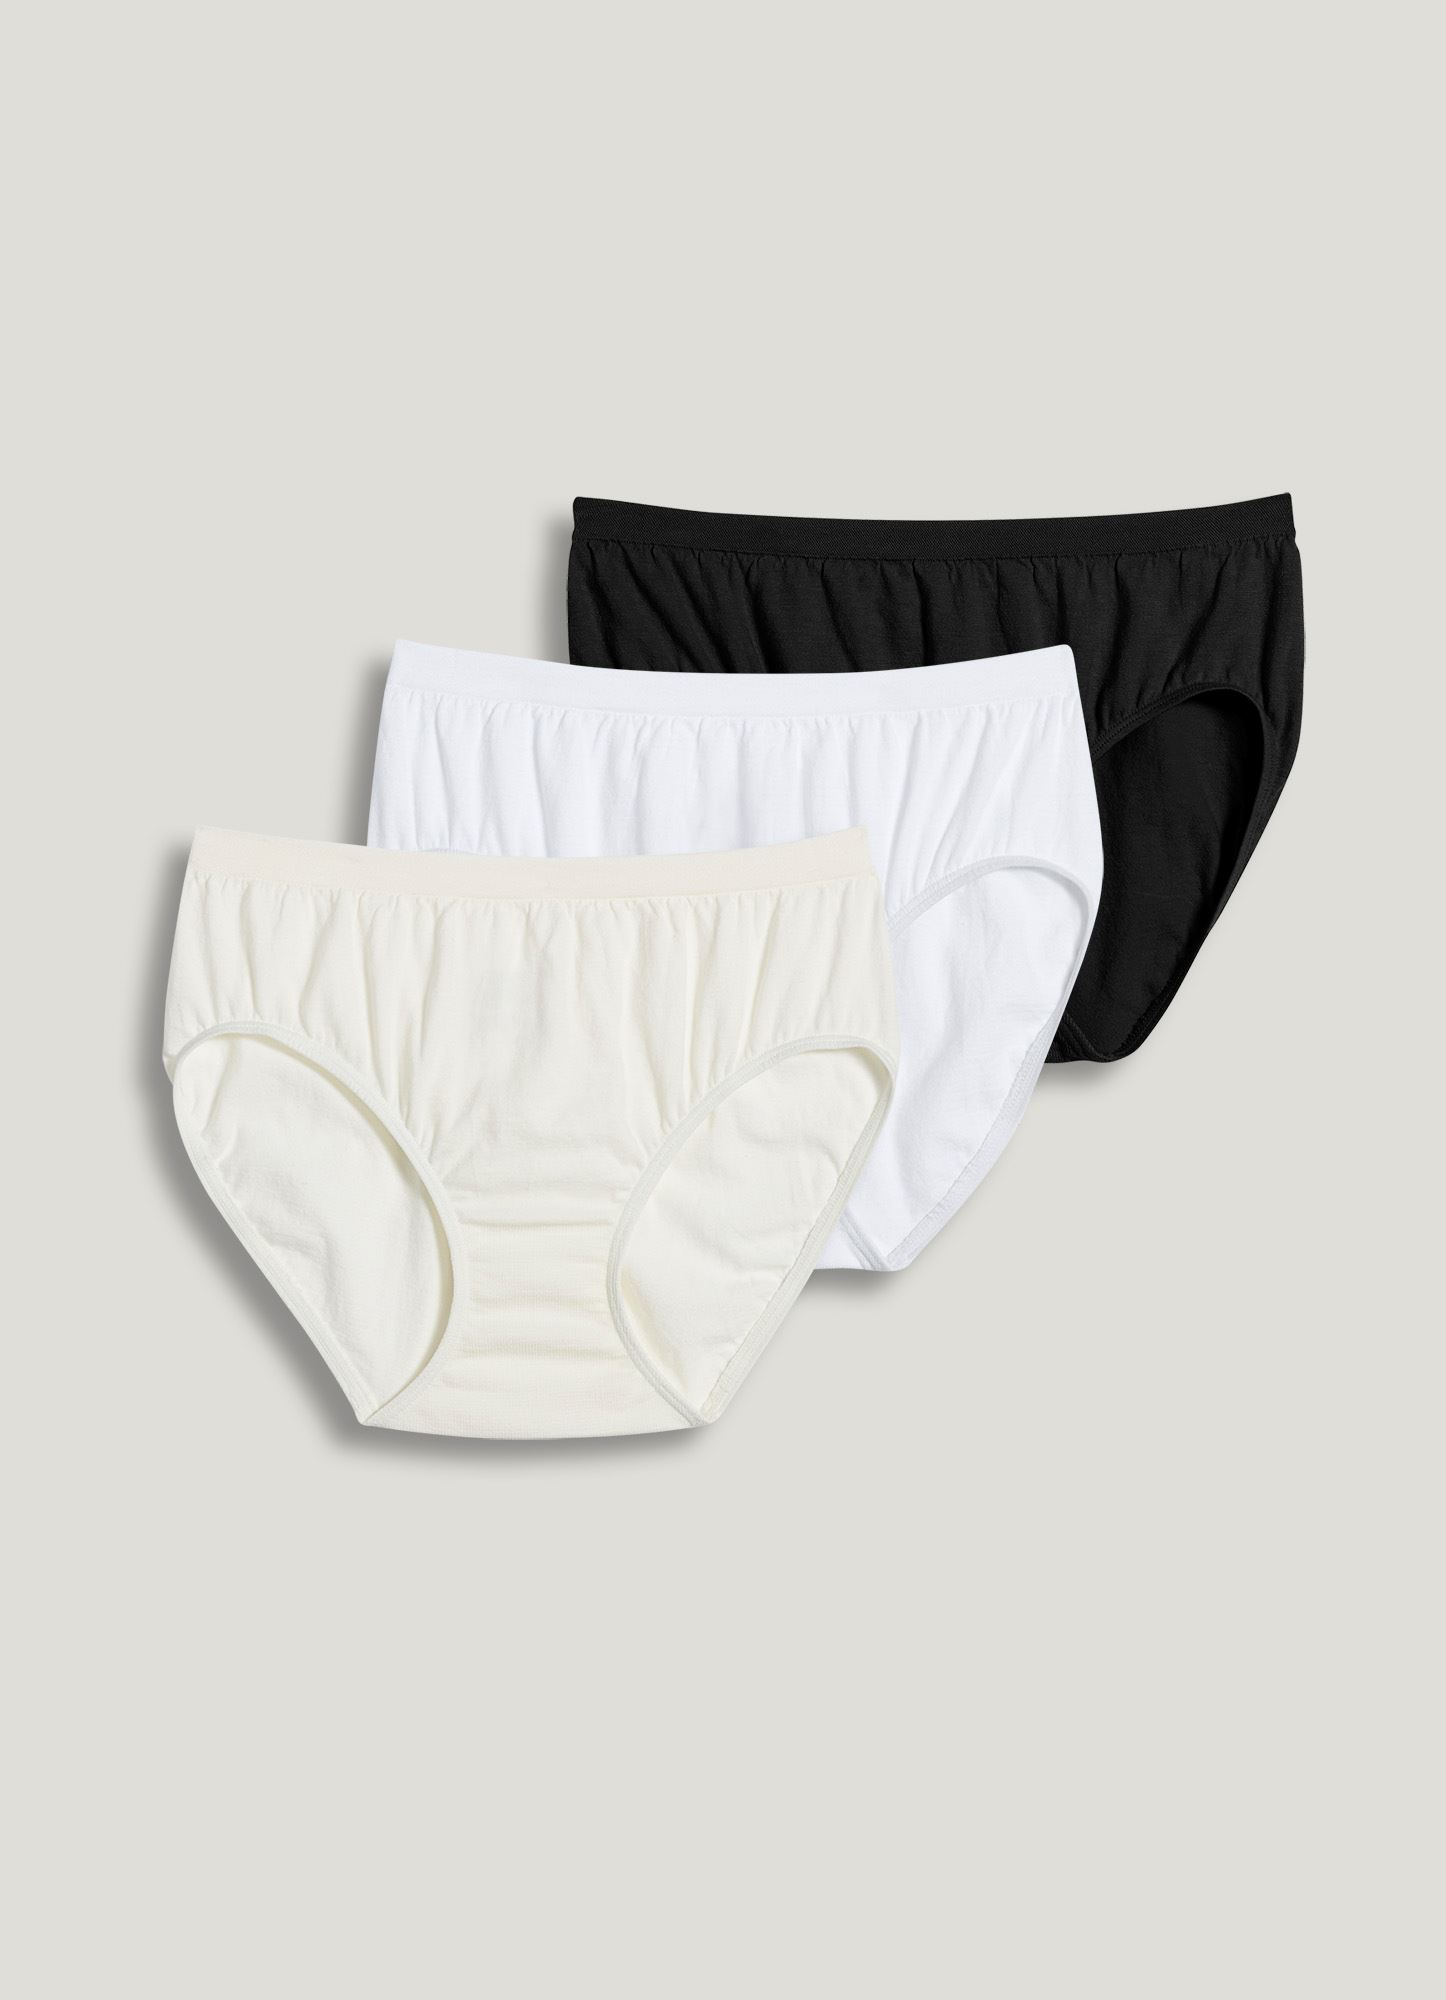 jockey life underwear rn 61683 – شراء jockey life underwear rn